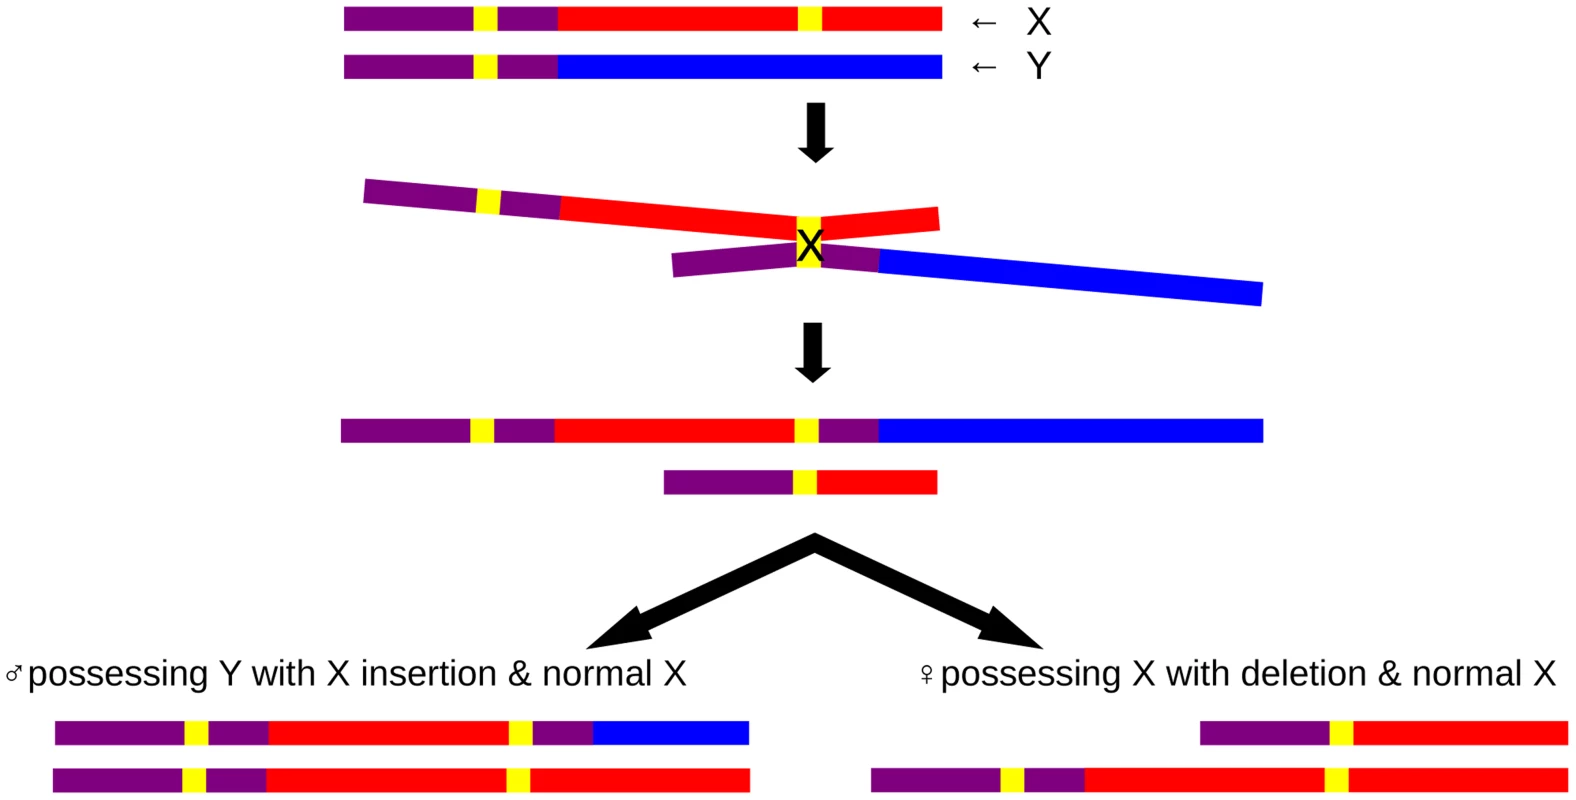 Schematic insertional translocation representation by non-allelic homologous recombination.